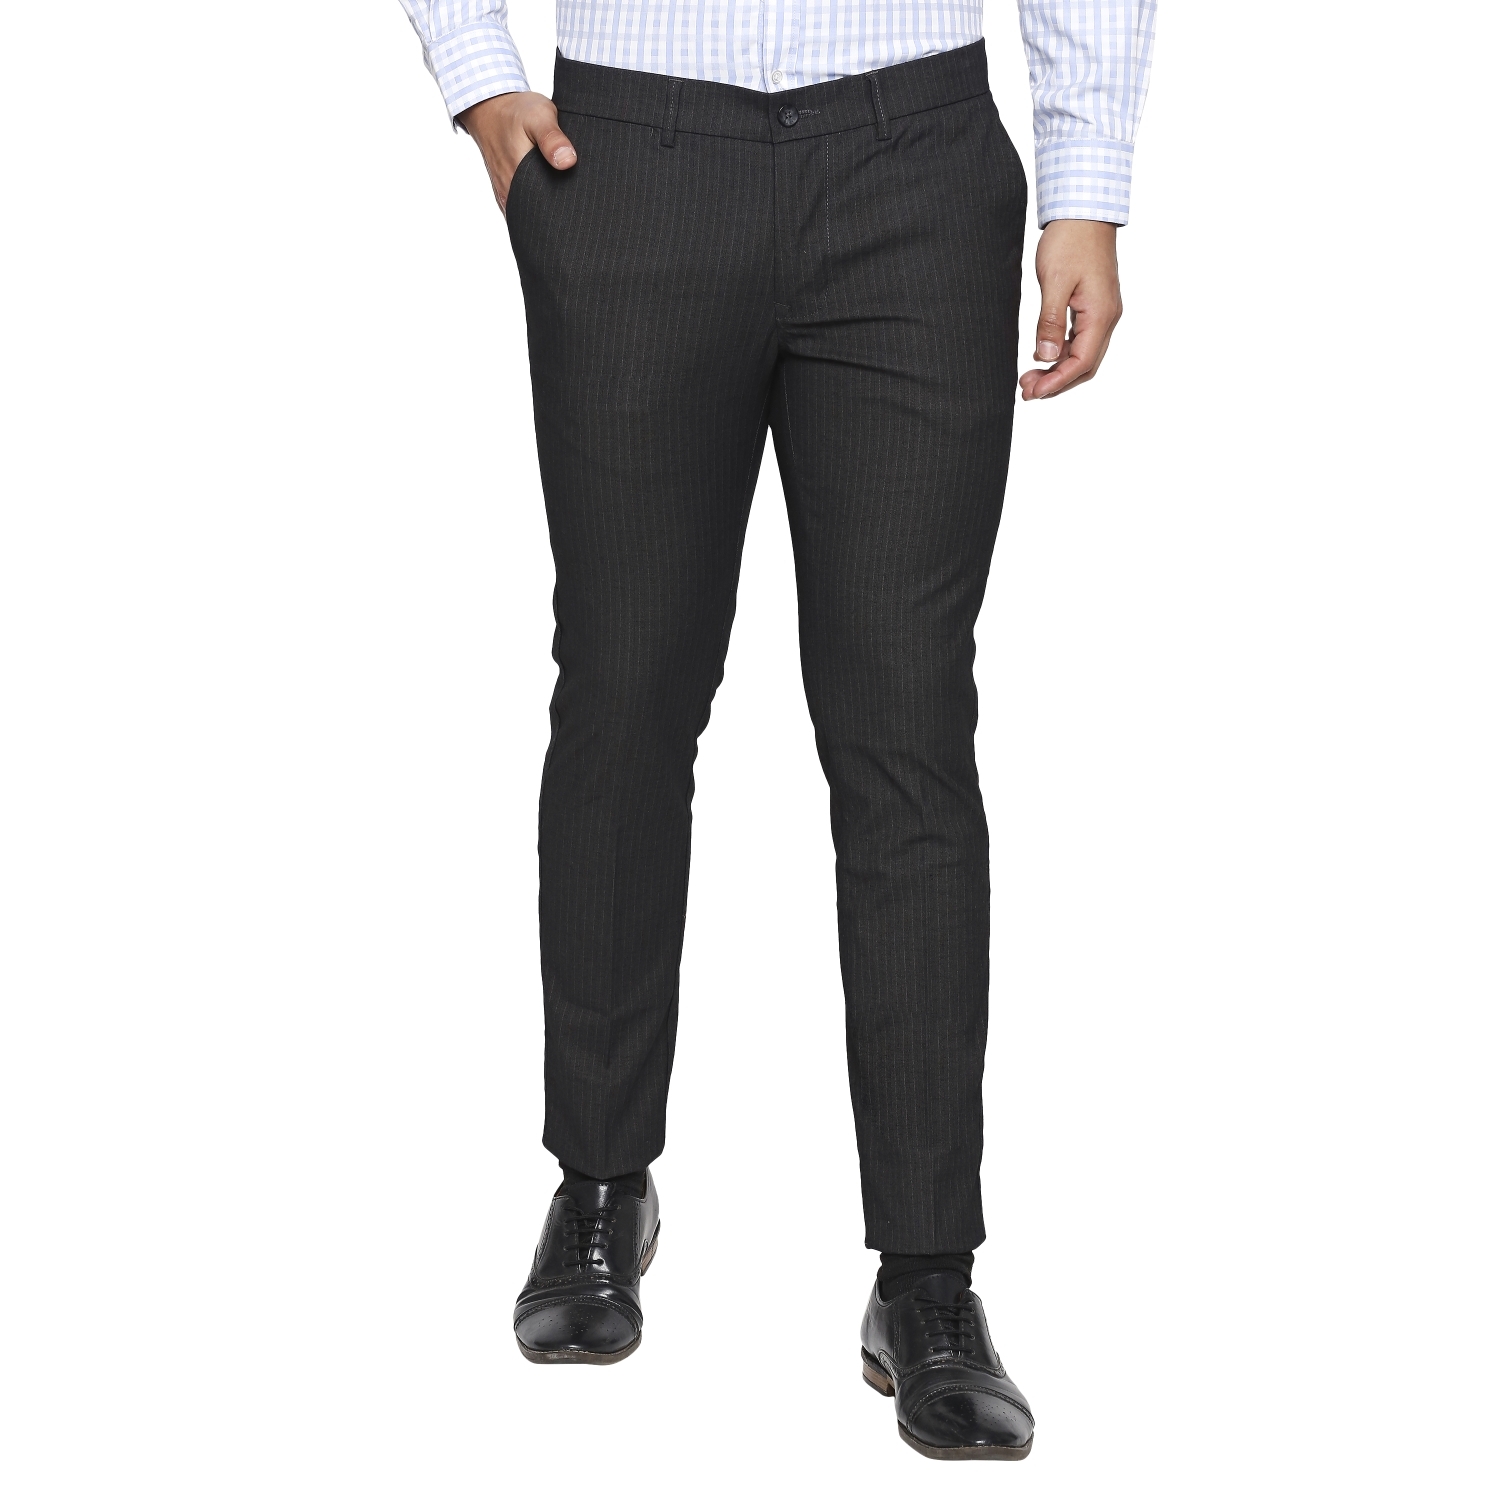 Basics | Basics Tapered Fit Shadow Black Stretch Trouser